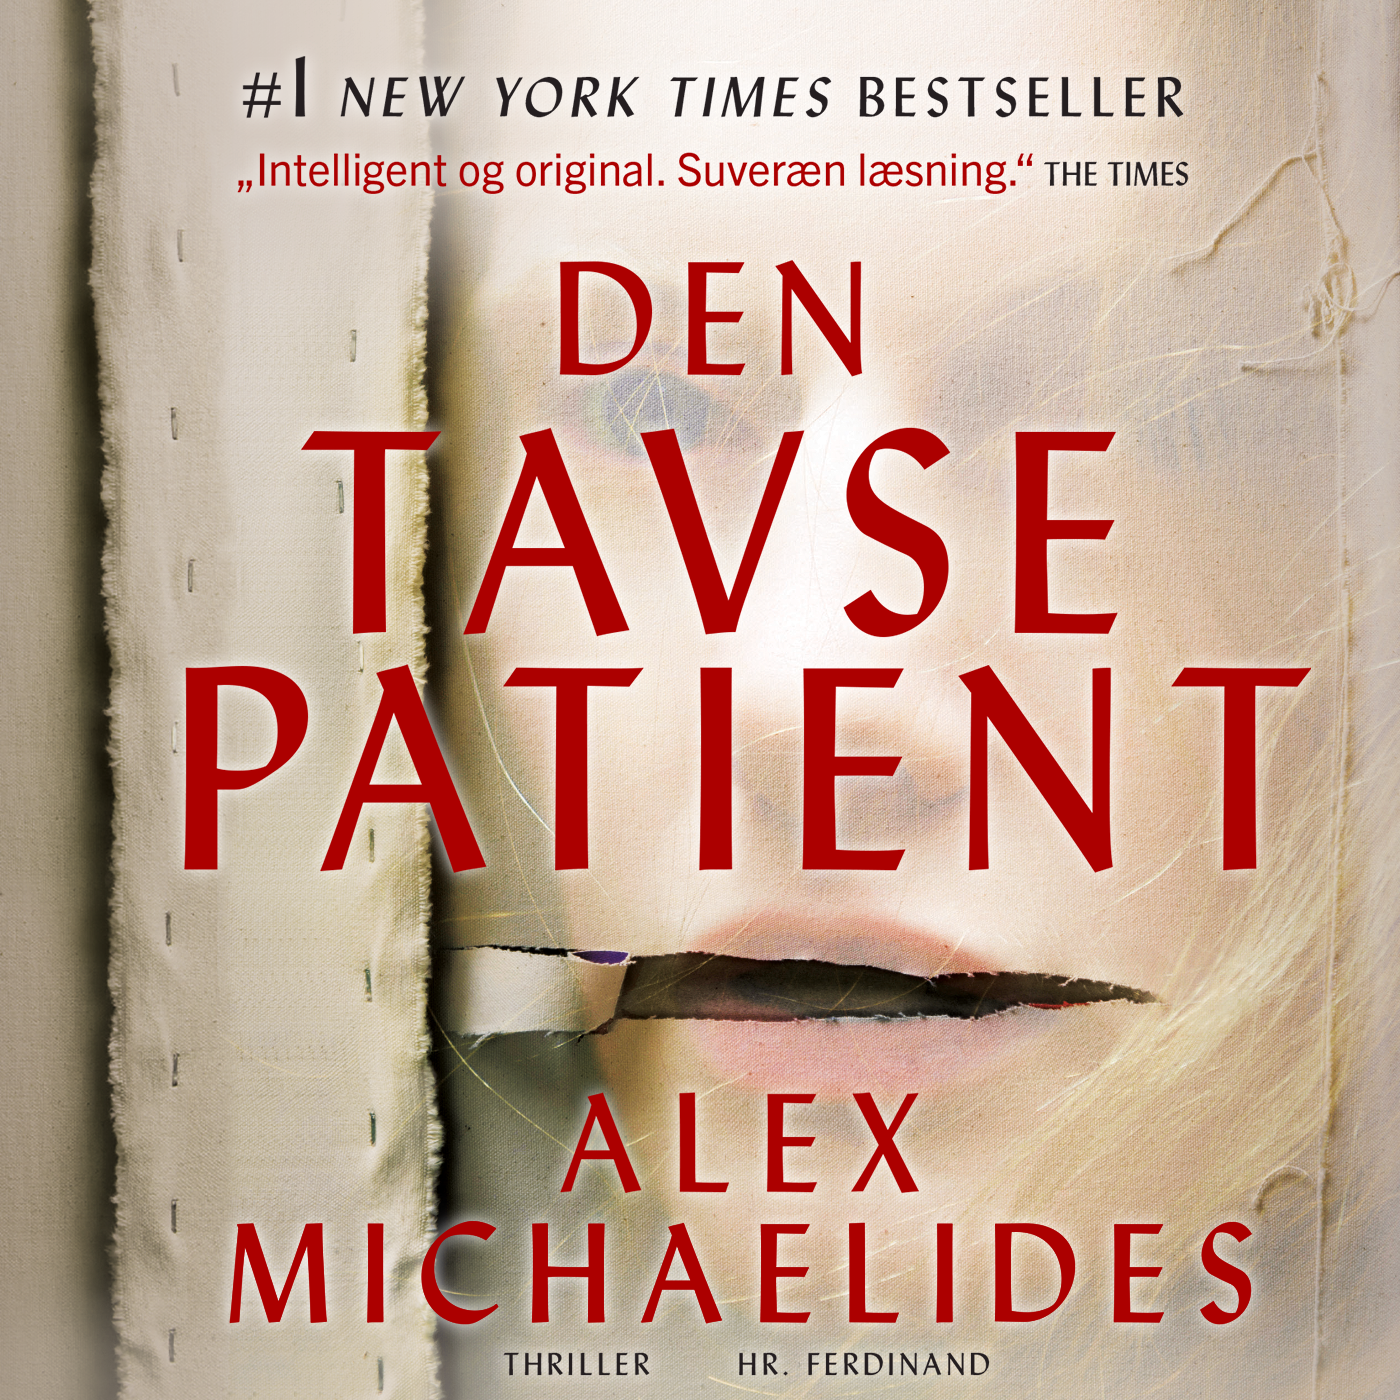 Den tavse patient, ljudbok av Alex Michaelides